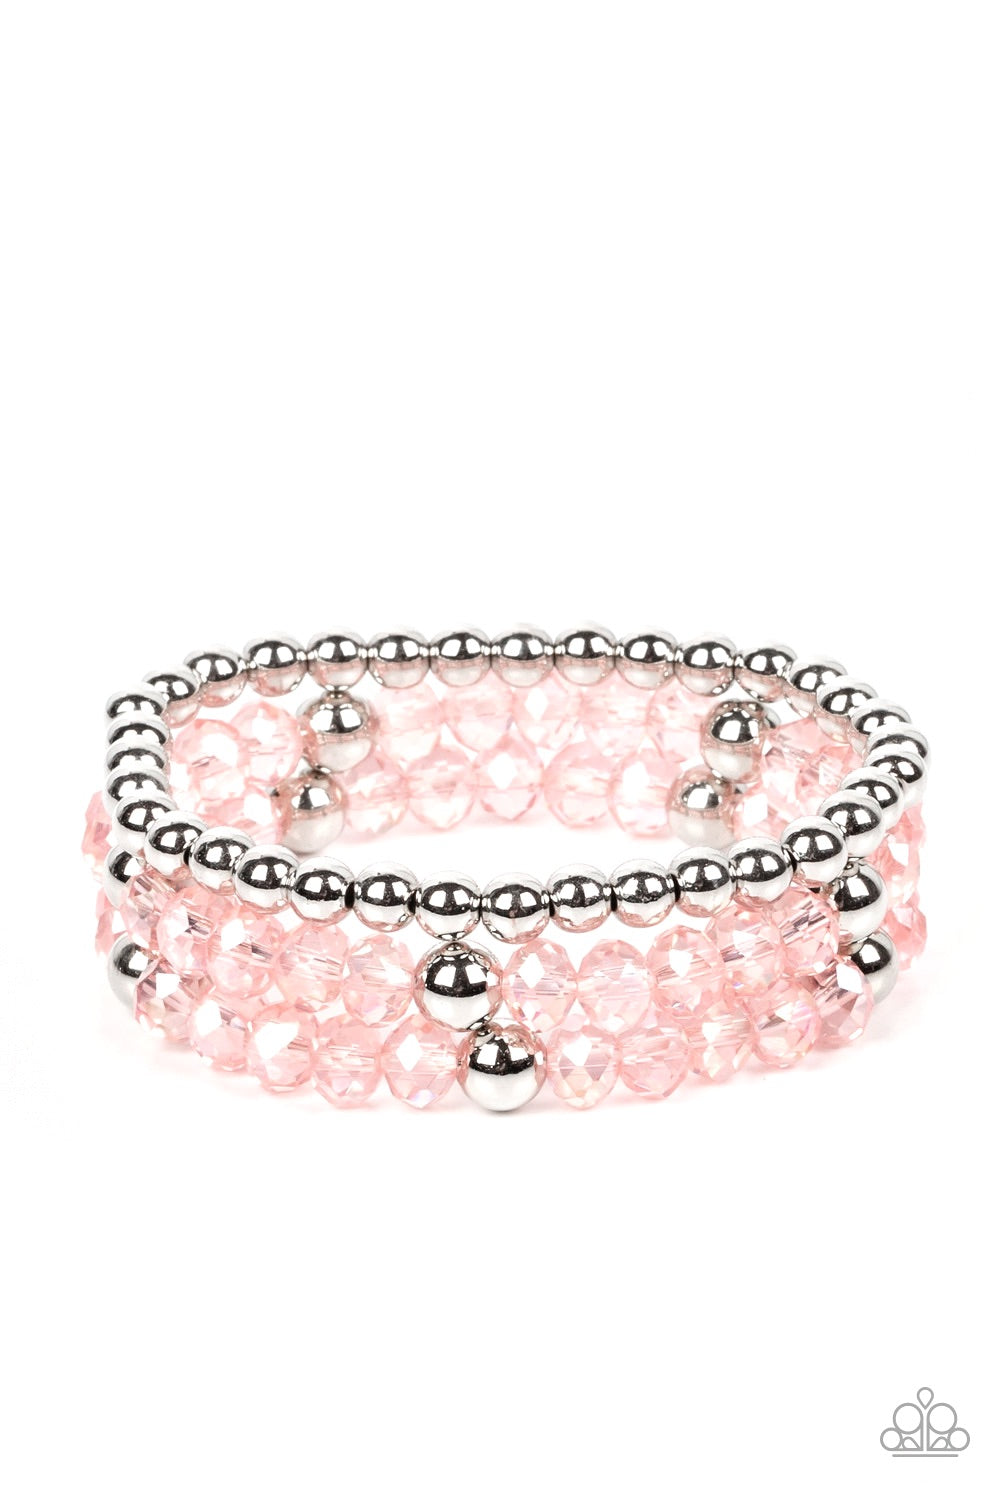 Paparazzi Prismatic Perceptions - Pink Bracelet - A Finishing Touch Jewelry